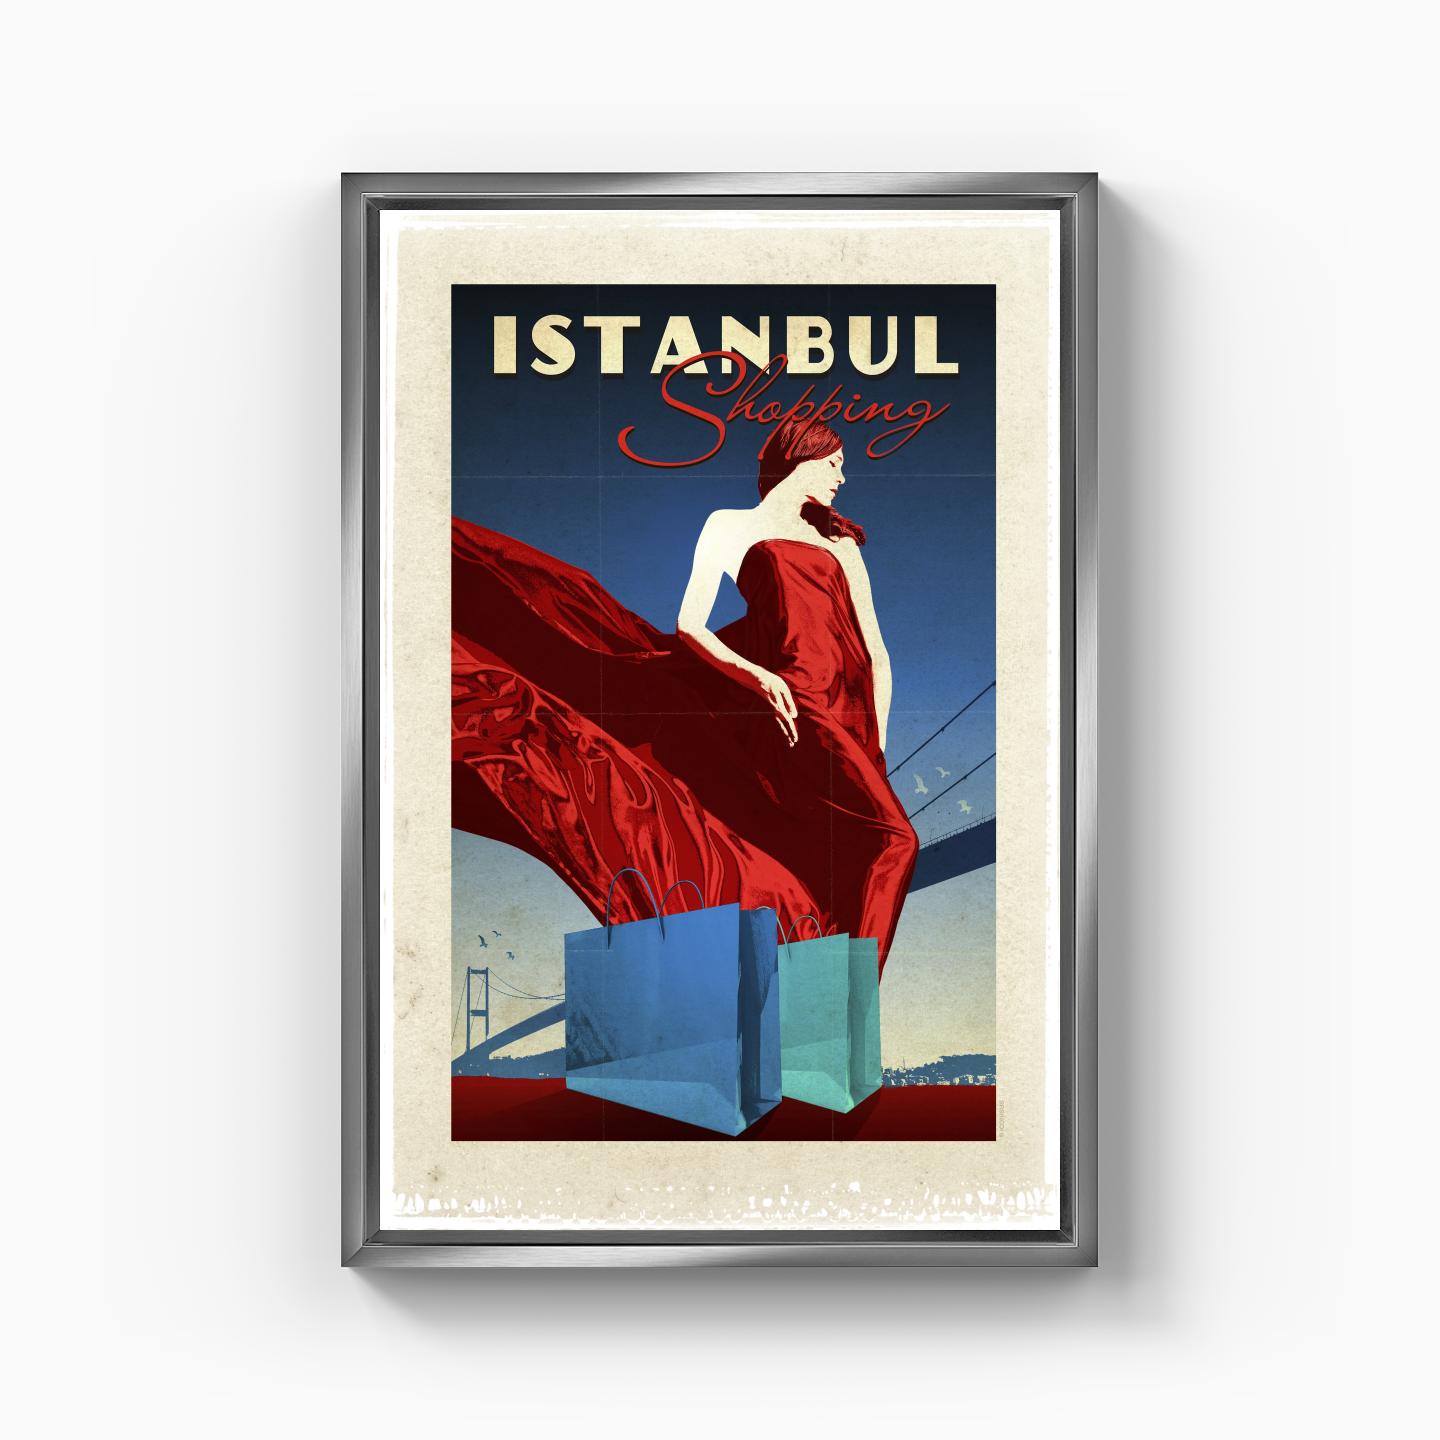 İstanbul Shopping - Kanvas Tablo